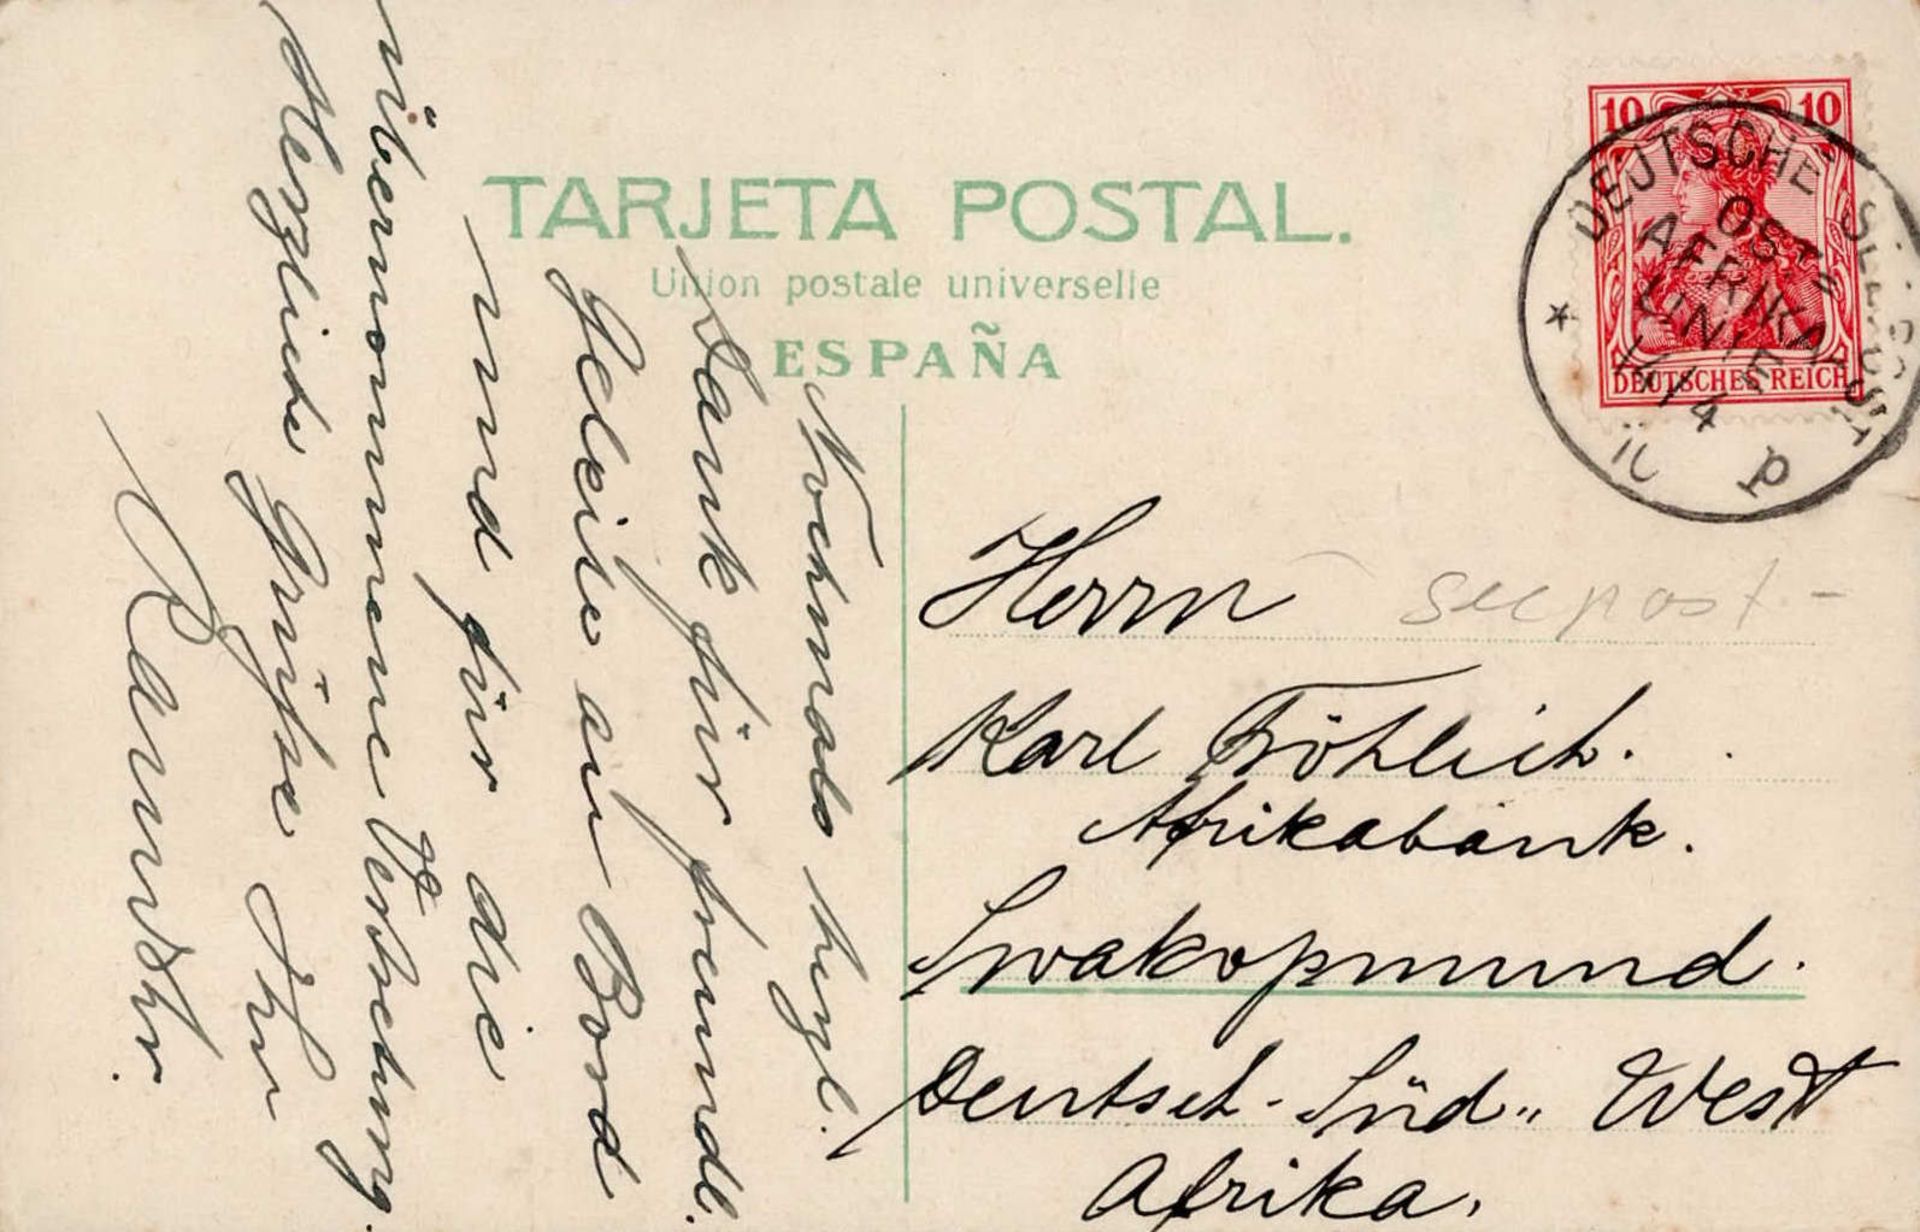 Kolonien Deutsch-Südwestafrika Deutsche Seepost Ost-Afrika-Linie Ub:p 1910 incoming mail